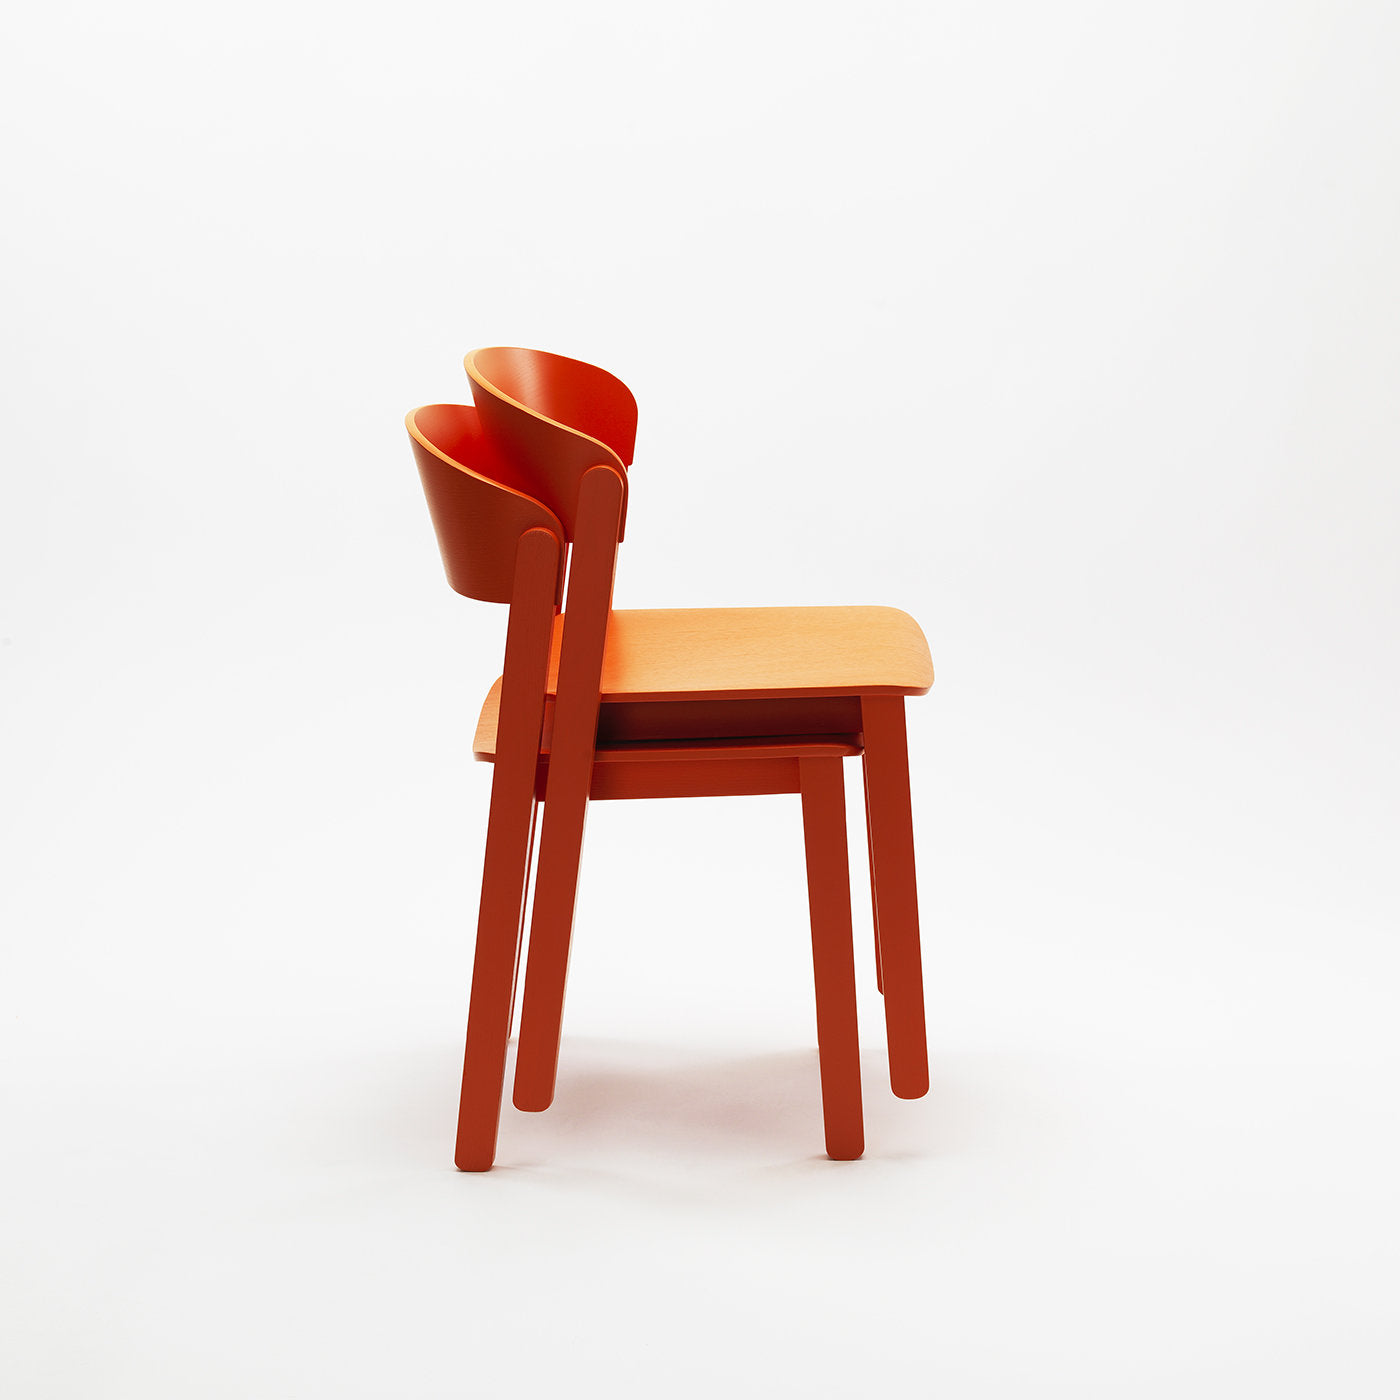 Set of 2 Salmon Orange Pur Chairs by Note Design Studio - Alternative view 2